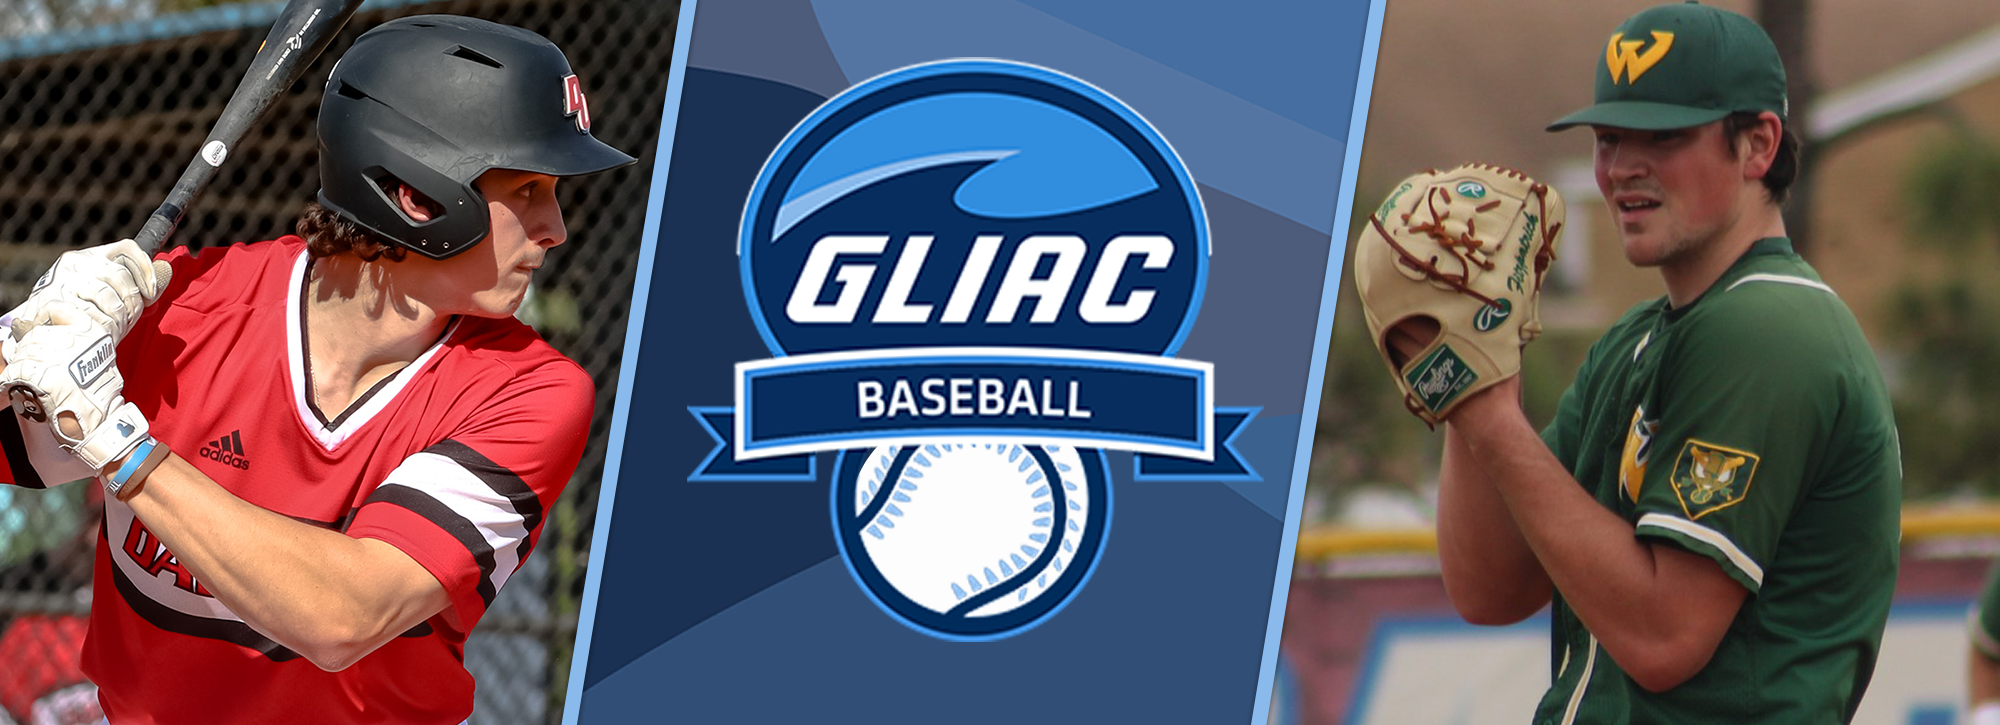 DU's Mets and WSU's Fitzpatrick receive GLIAC baseball weekly honors